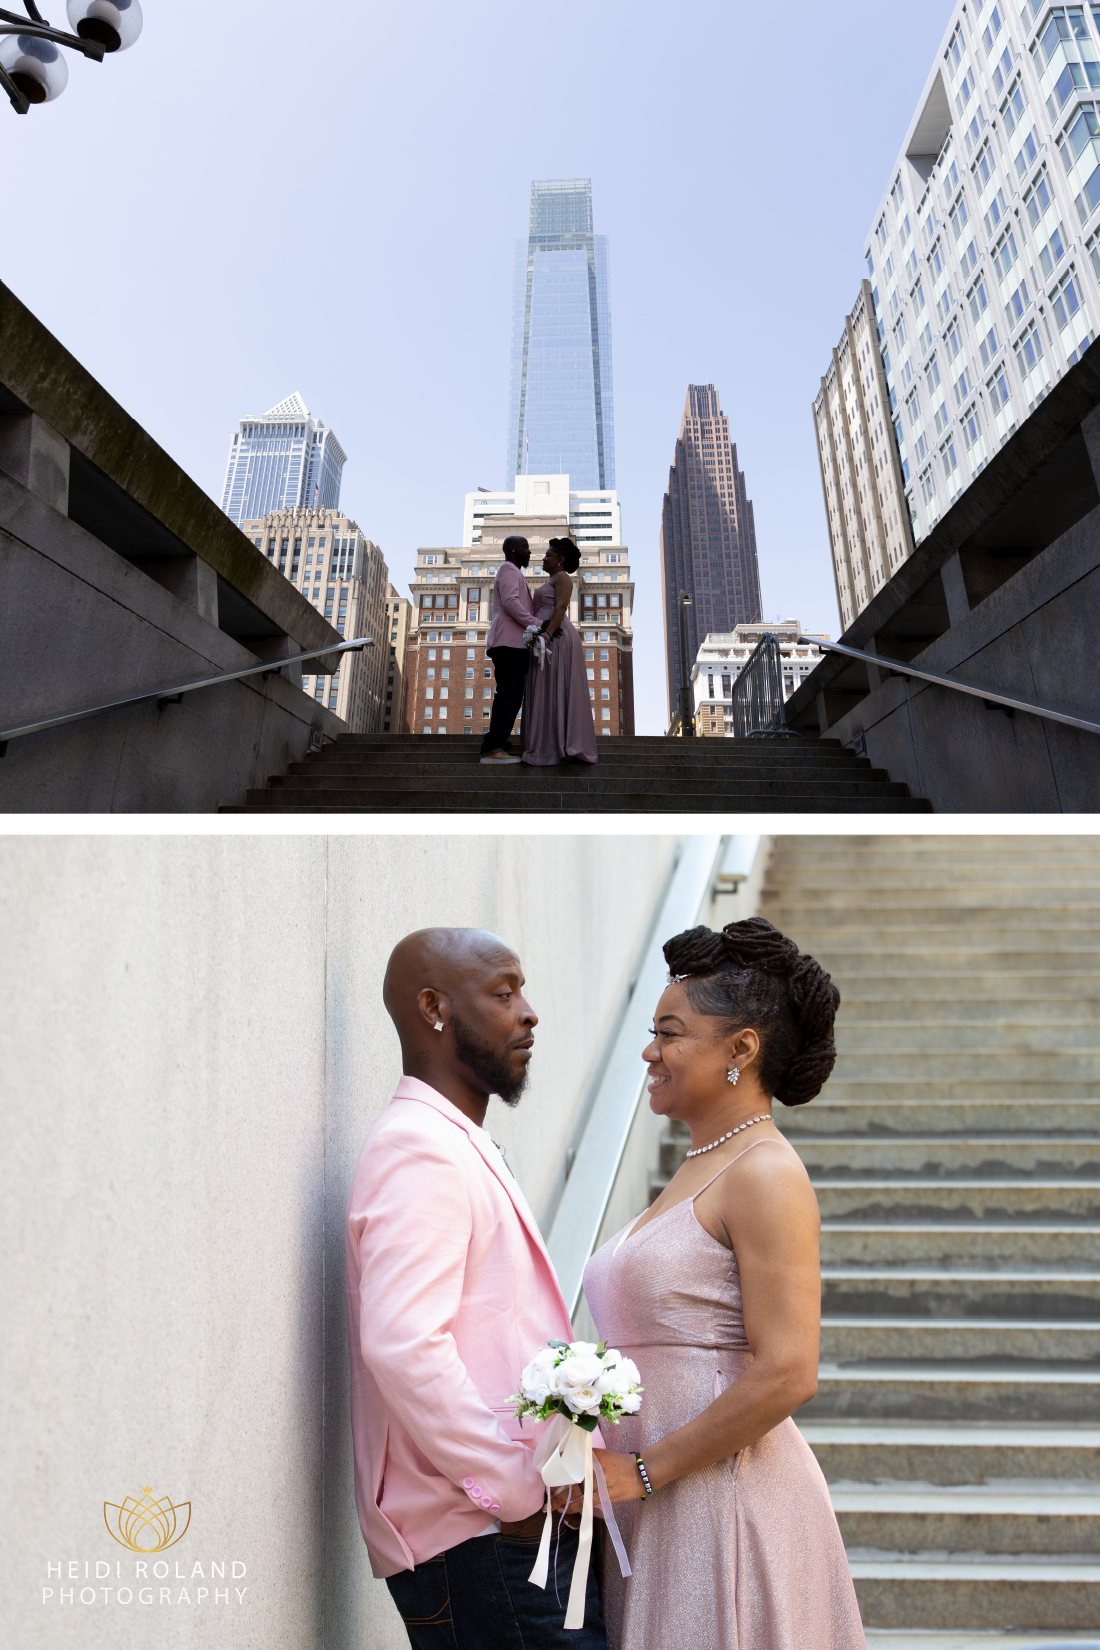 Bride and groom with Philadelphia city skyline